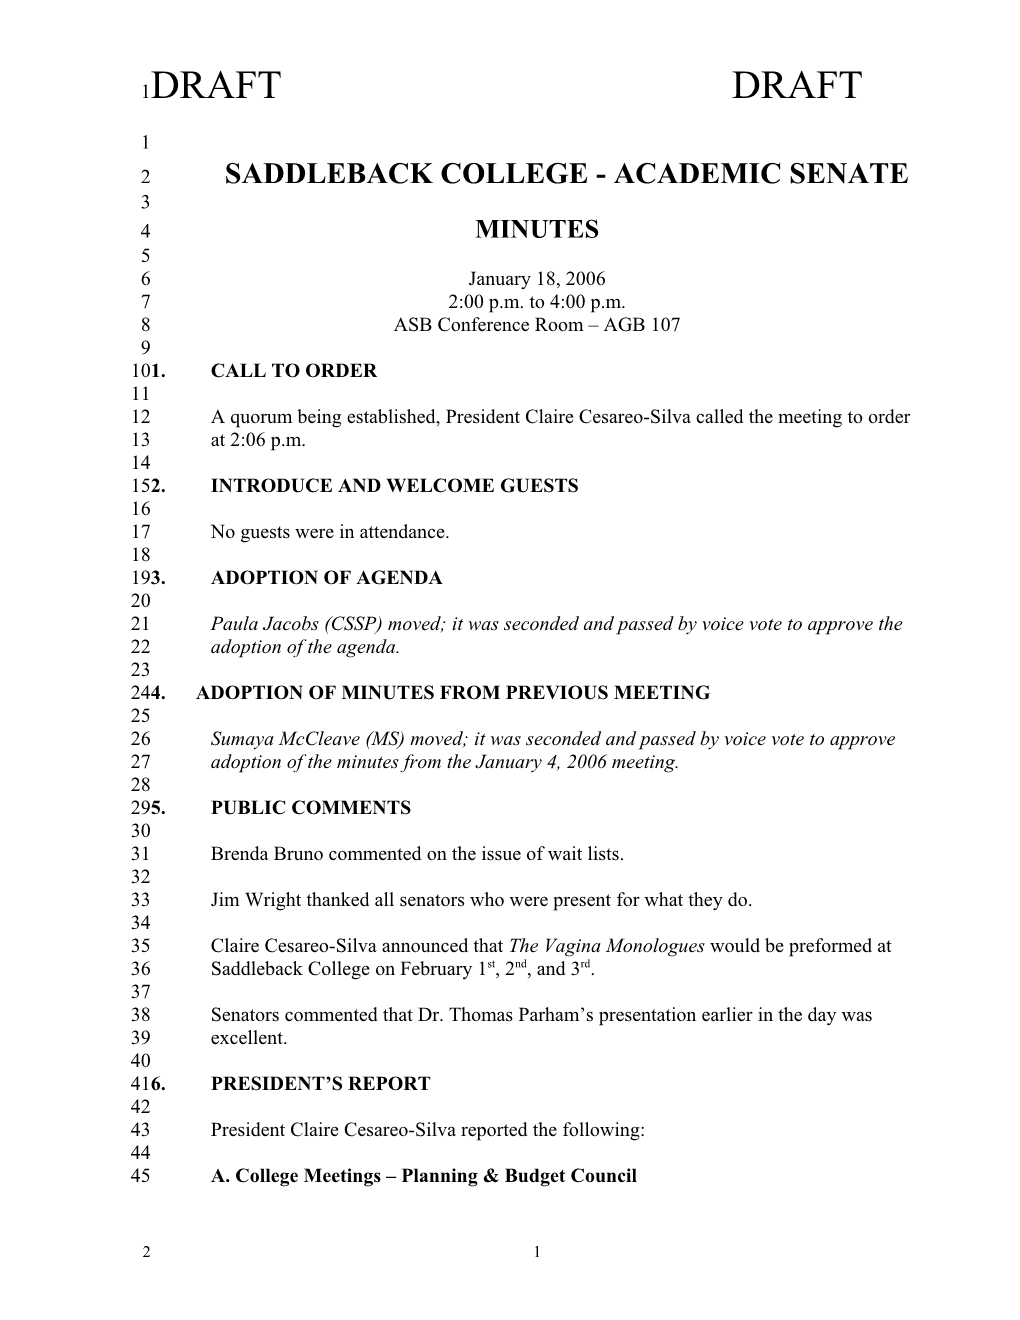 Saddleback College - Academic Senate s1